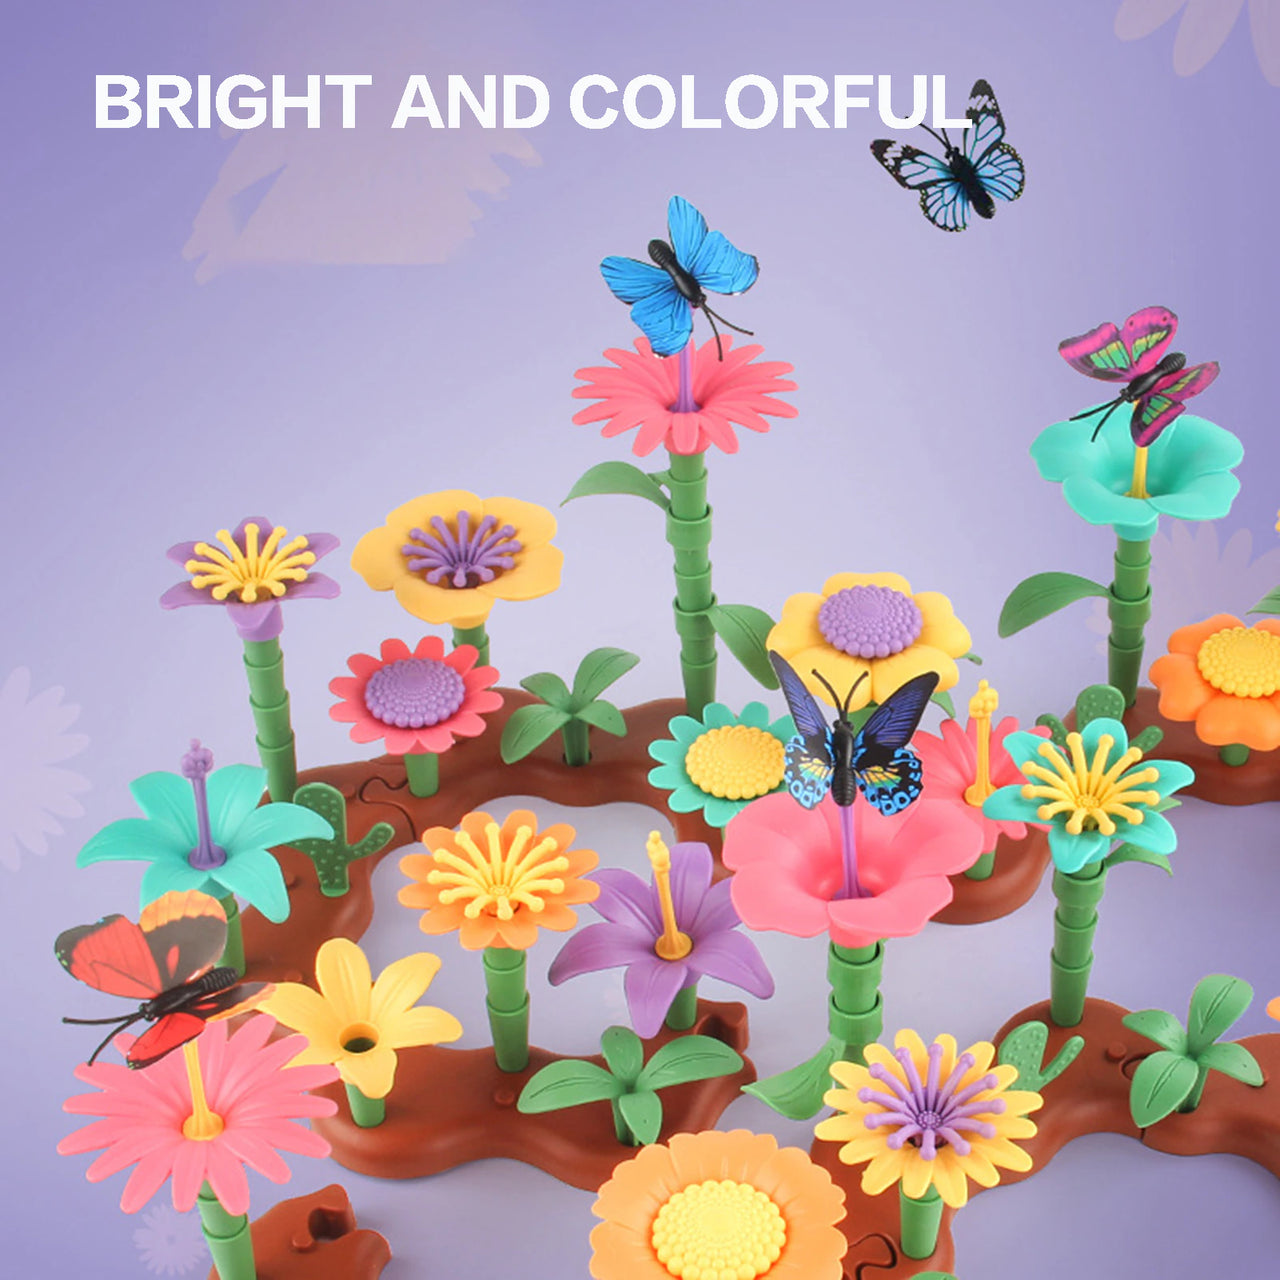 Flower Garden Building Toy (Includes Butterflies)